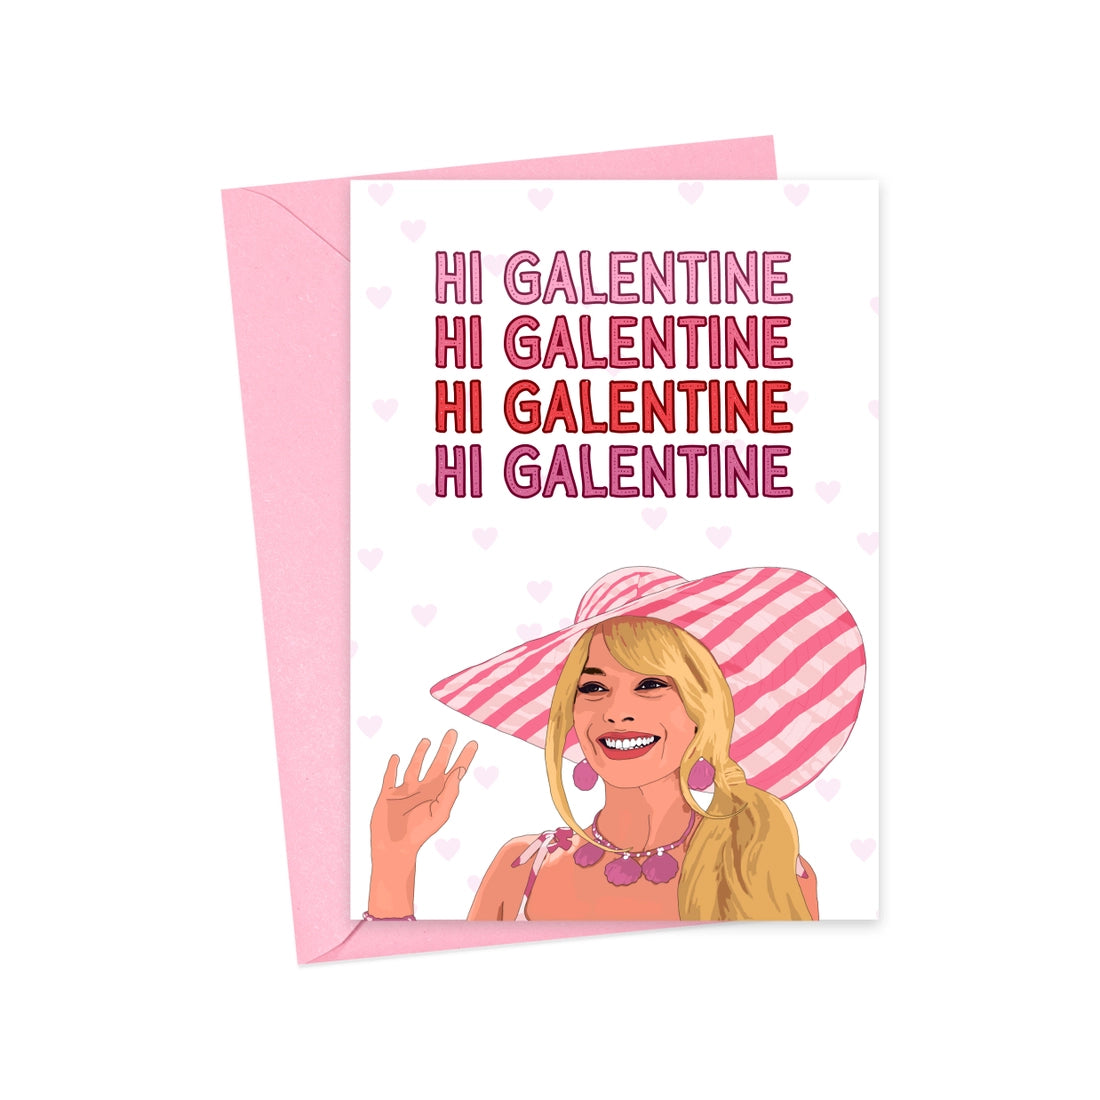 Barbie Galentine Greeting Card